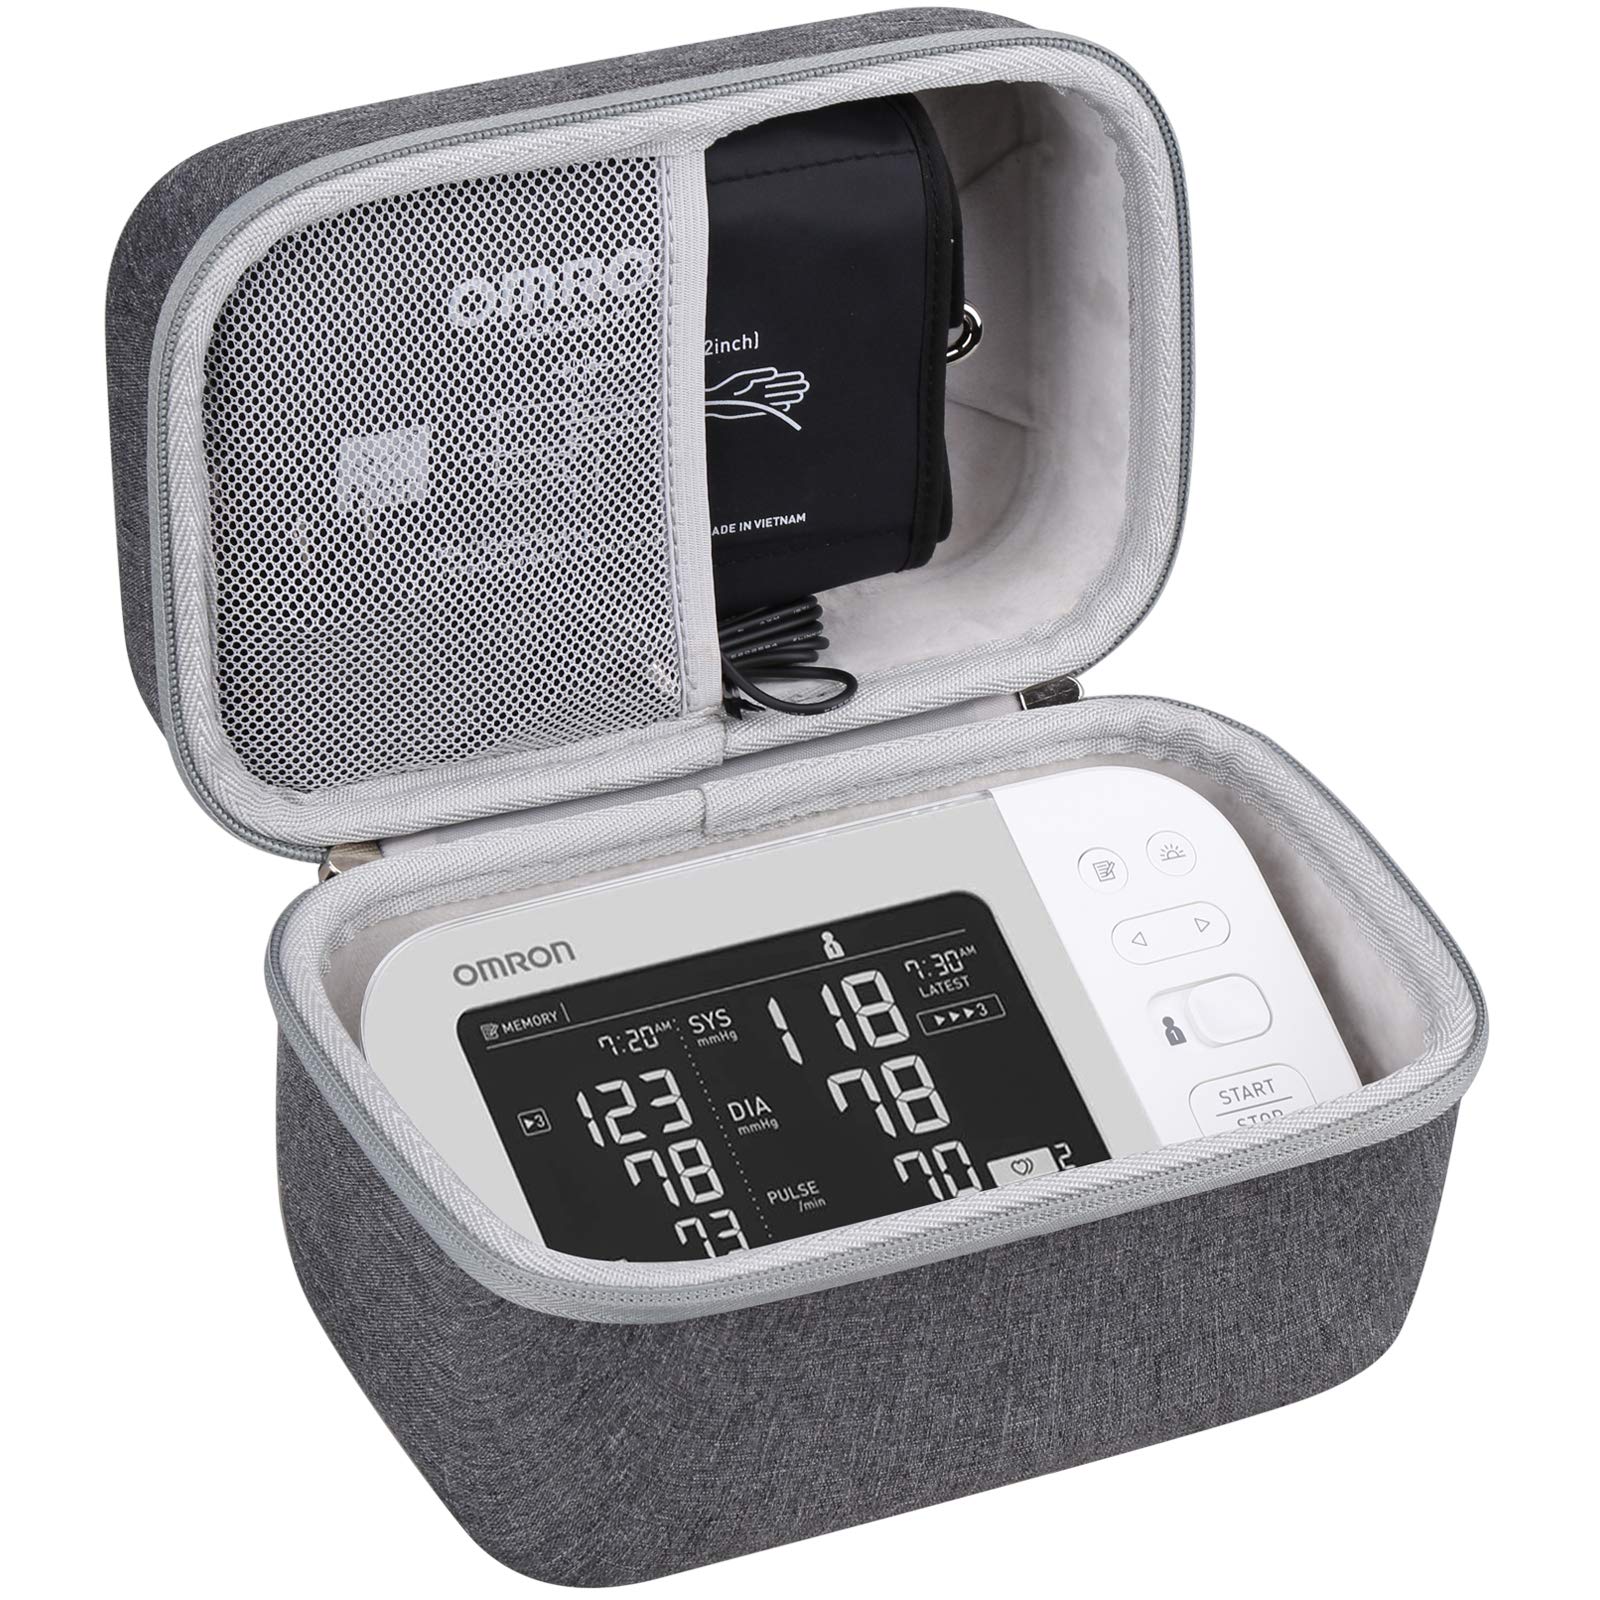  LTGEM Hard Case for OMRON 3 Series BP7100 / Silver BP5250 /  Bronze BP5100 / 5 Series BP7250 Blood Pressure Monitor(Inside:  6.2x5x4.2), Case Only : Health & Household